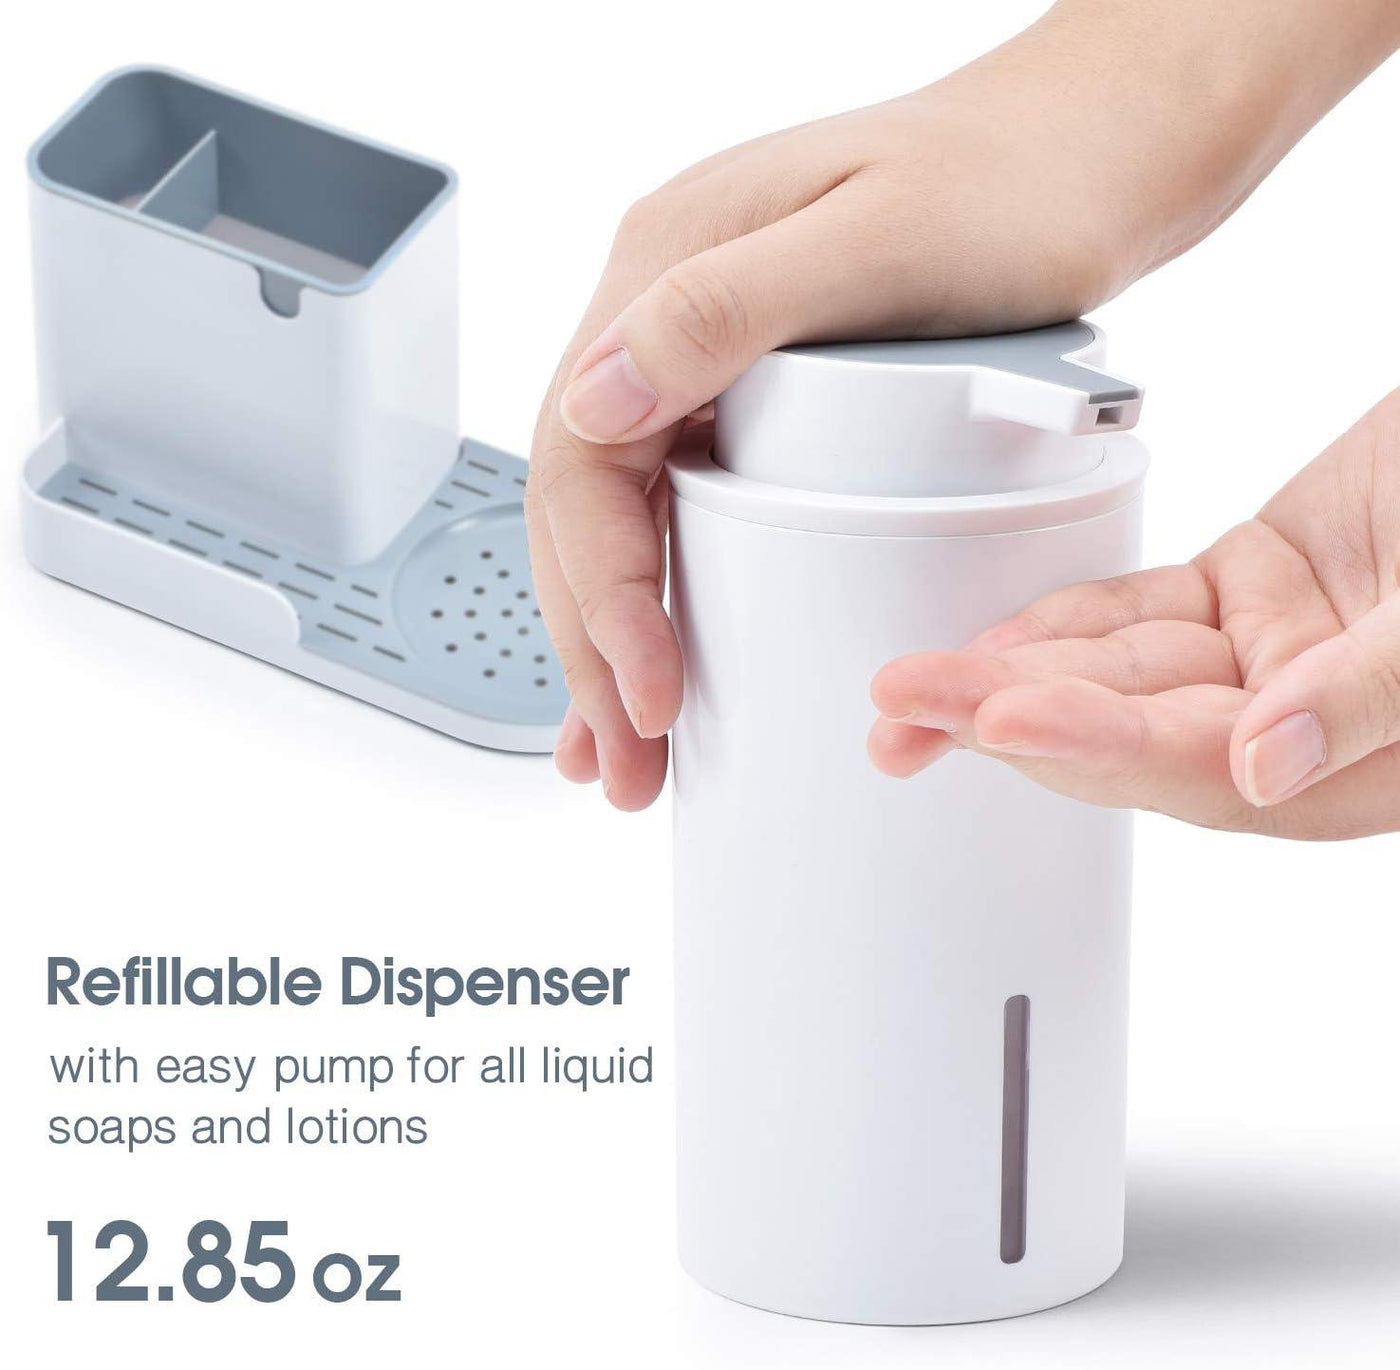 KINGRACK Sink Caddy with Soap Dispenser Pump For Kitchen / Bathroom - Massive Discounts